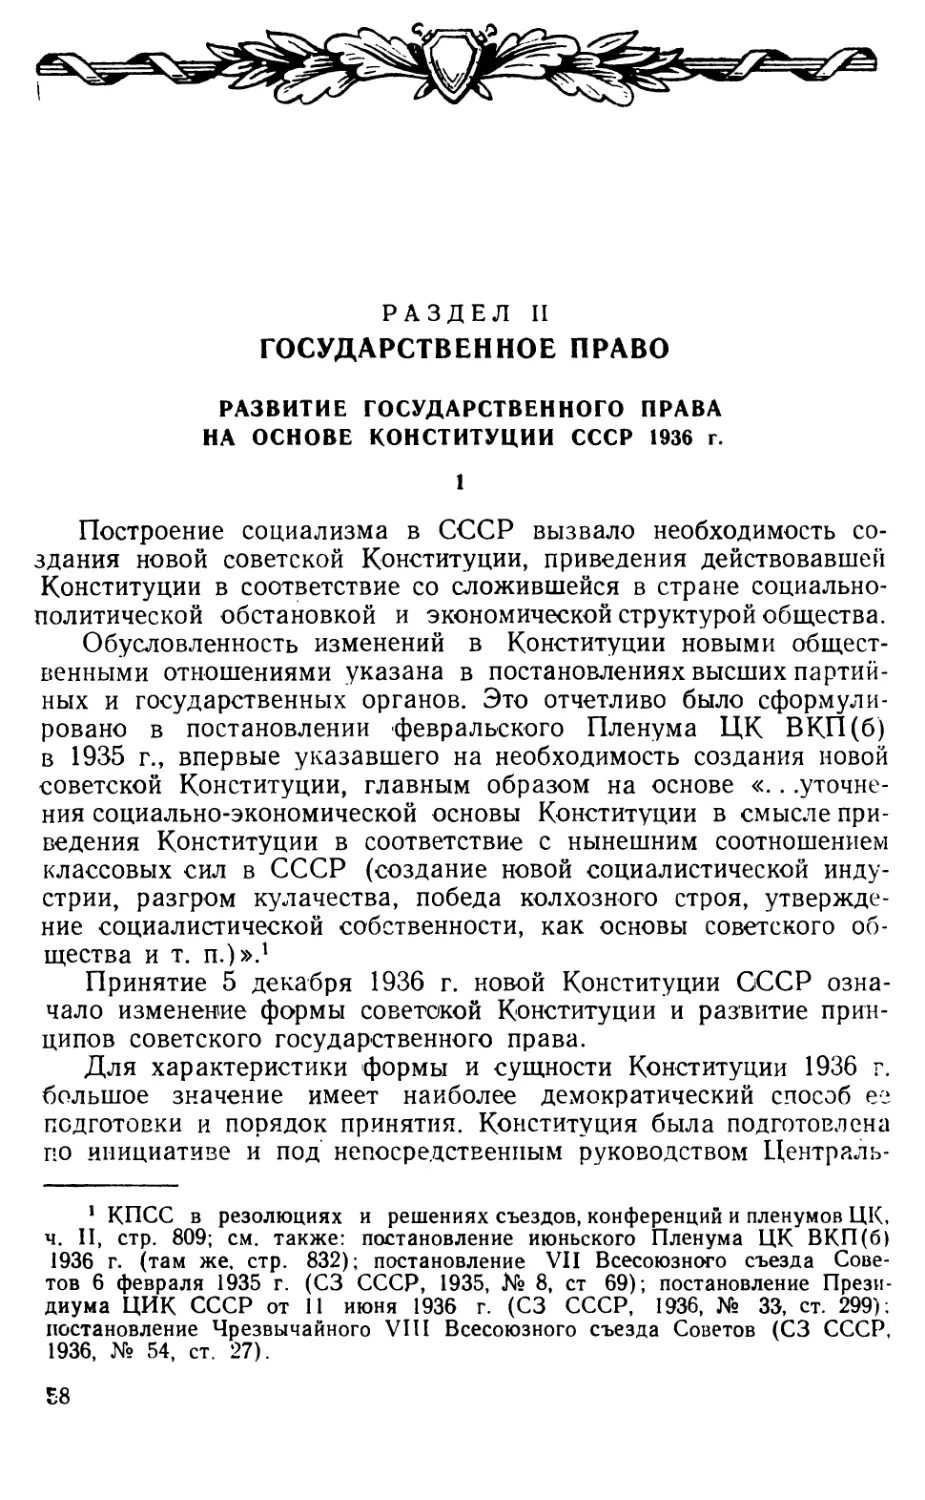 Развитие государственного права на основе Конституции СССР 1936 г.